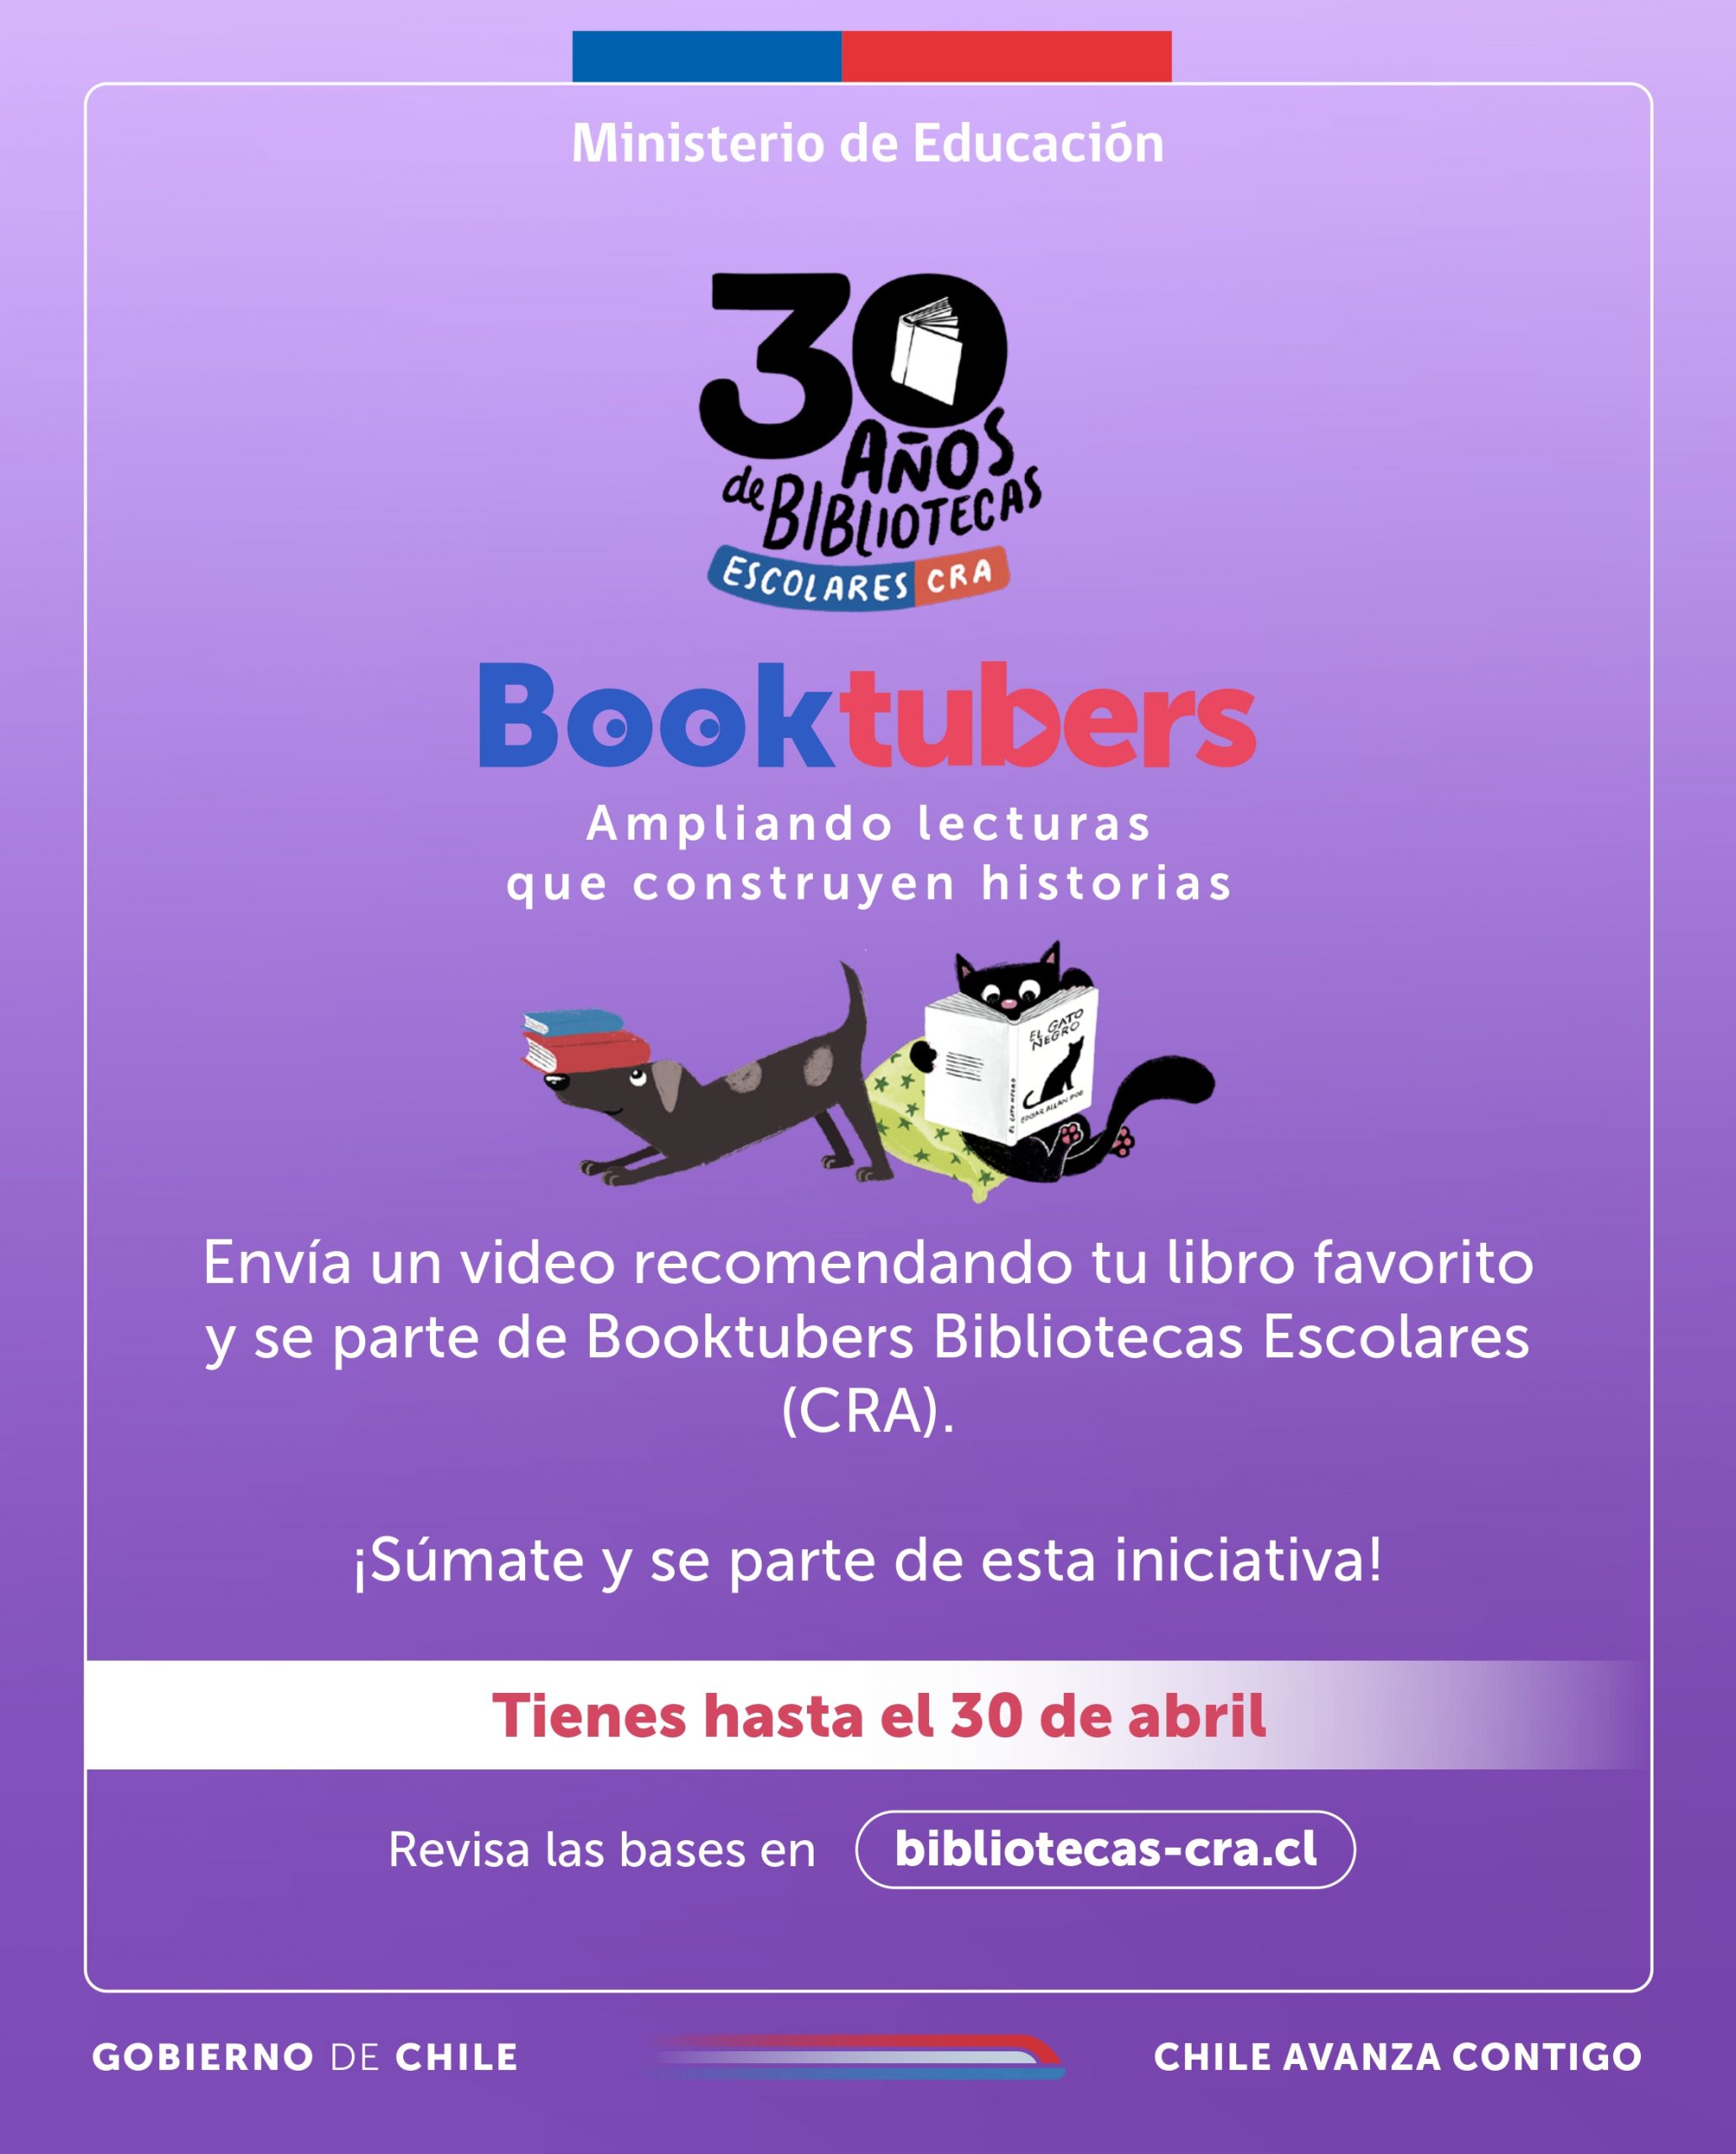 BOOKTUBERS, CONCURSA CON TU VIDEO-LIBRO